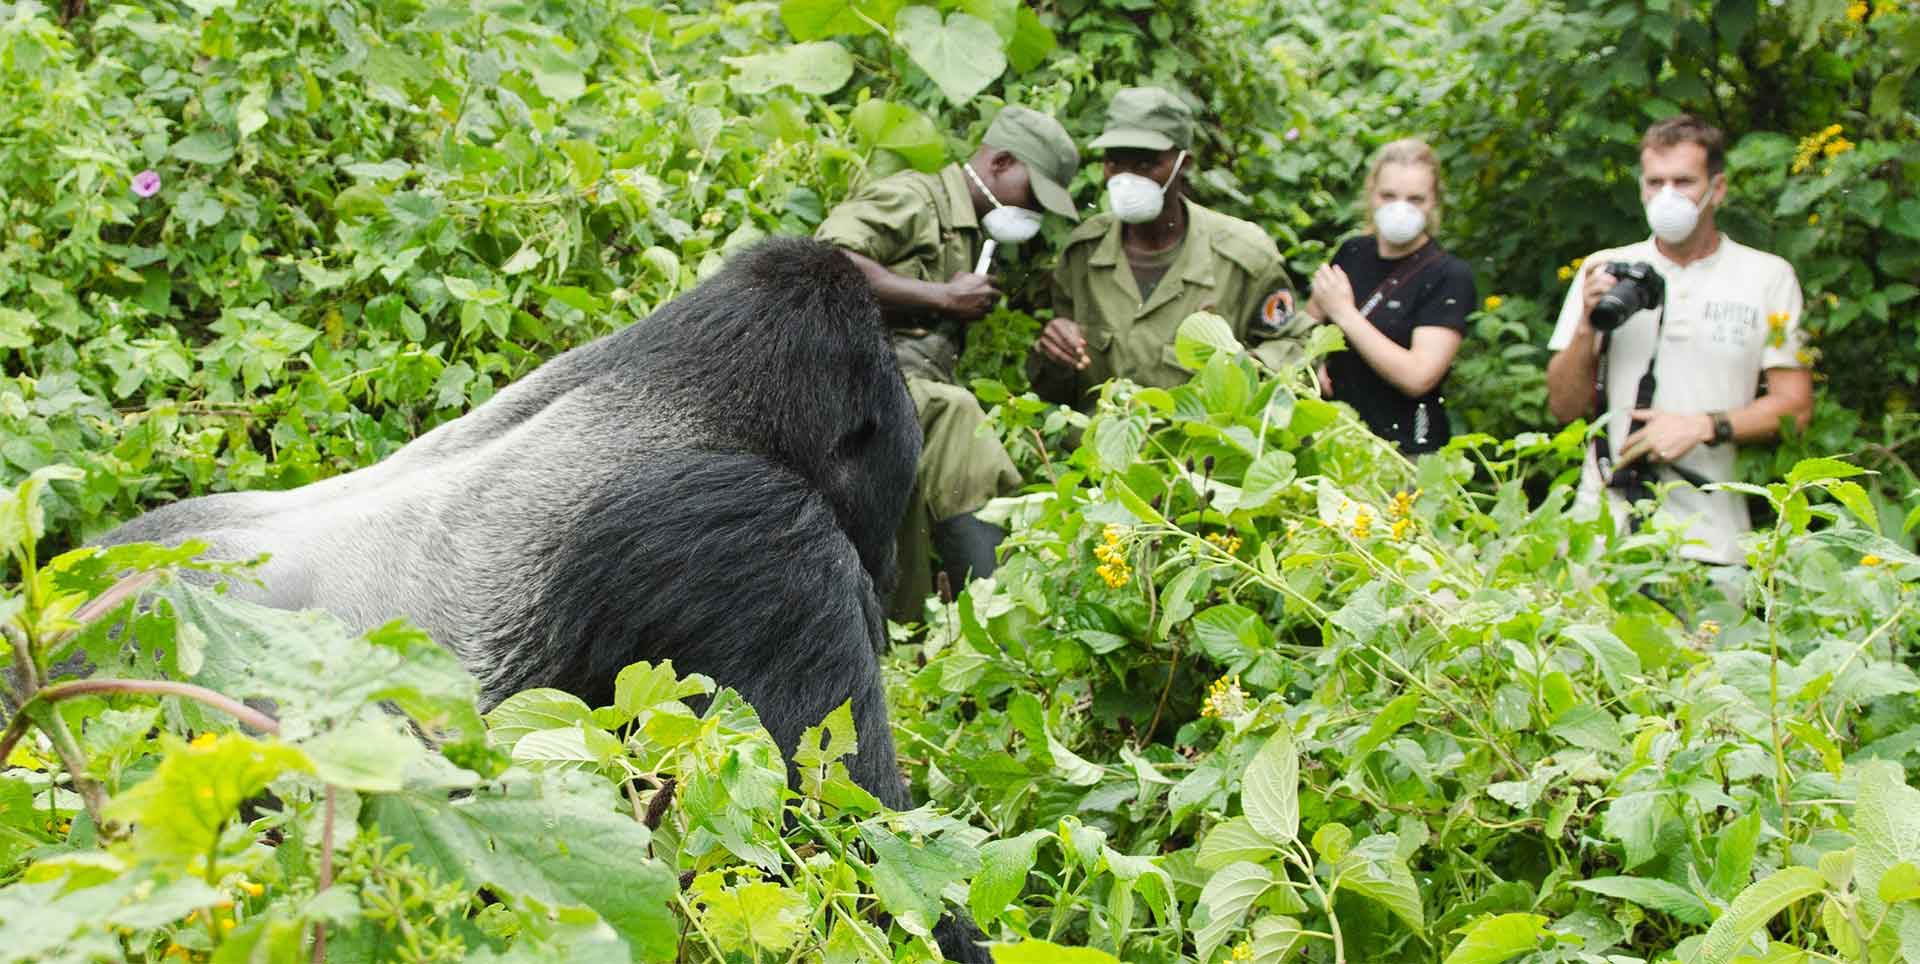 Gorillas and Nature in Danger